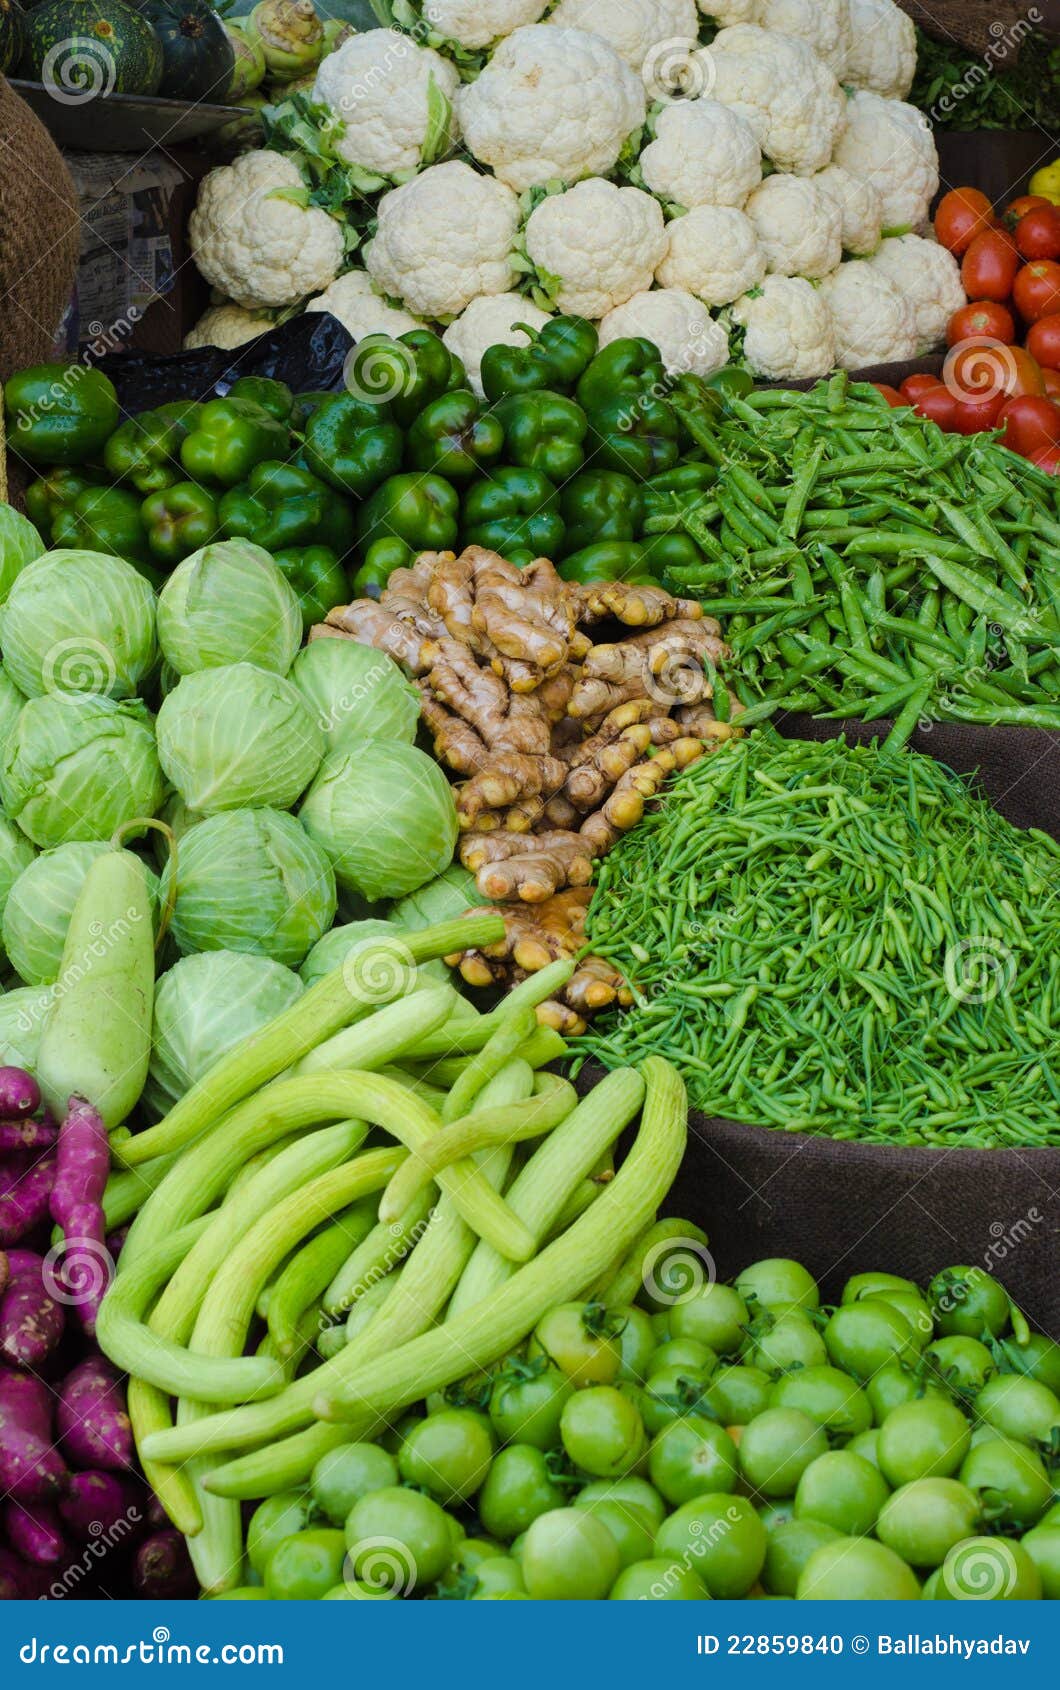 Green Vegetables Vertical Banner Stock Photo - Image of basket, group